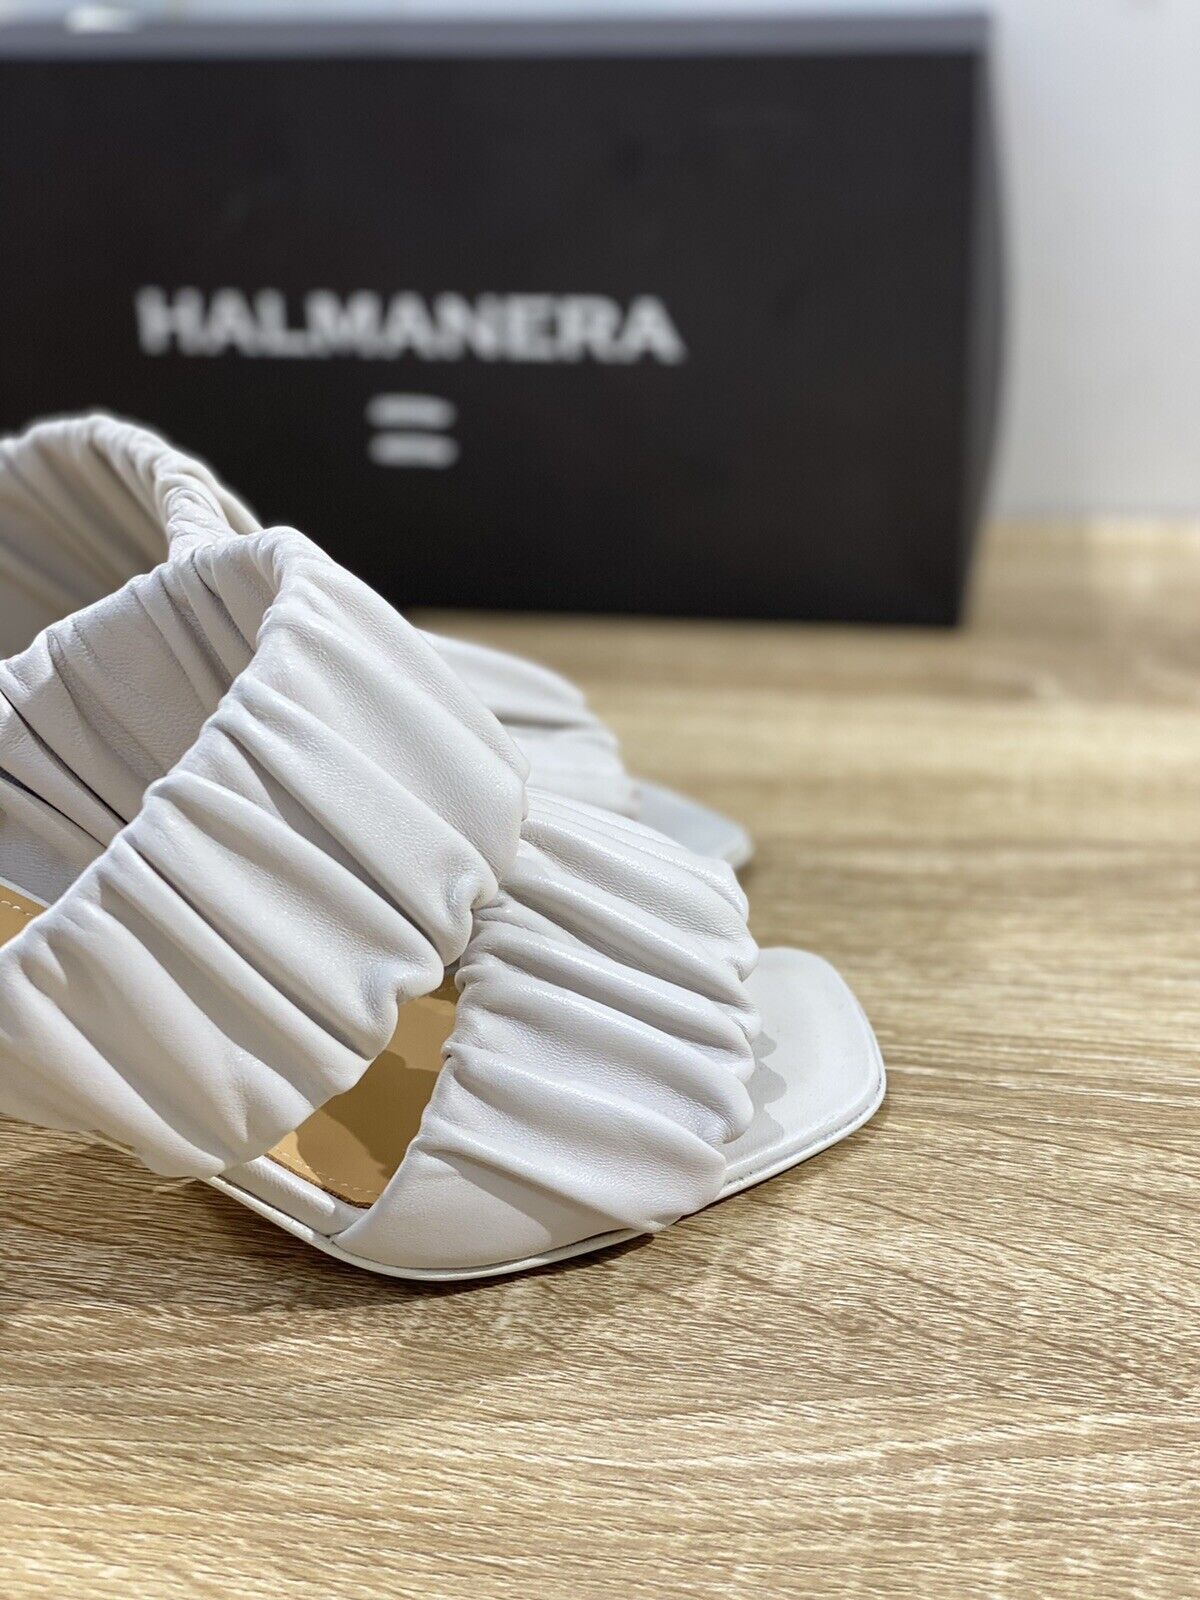 Halmanera Sandalo donna in pelle ghiaccio luxury sandal 36